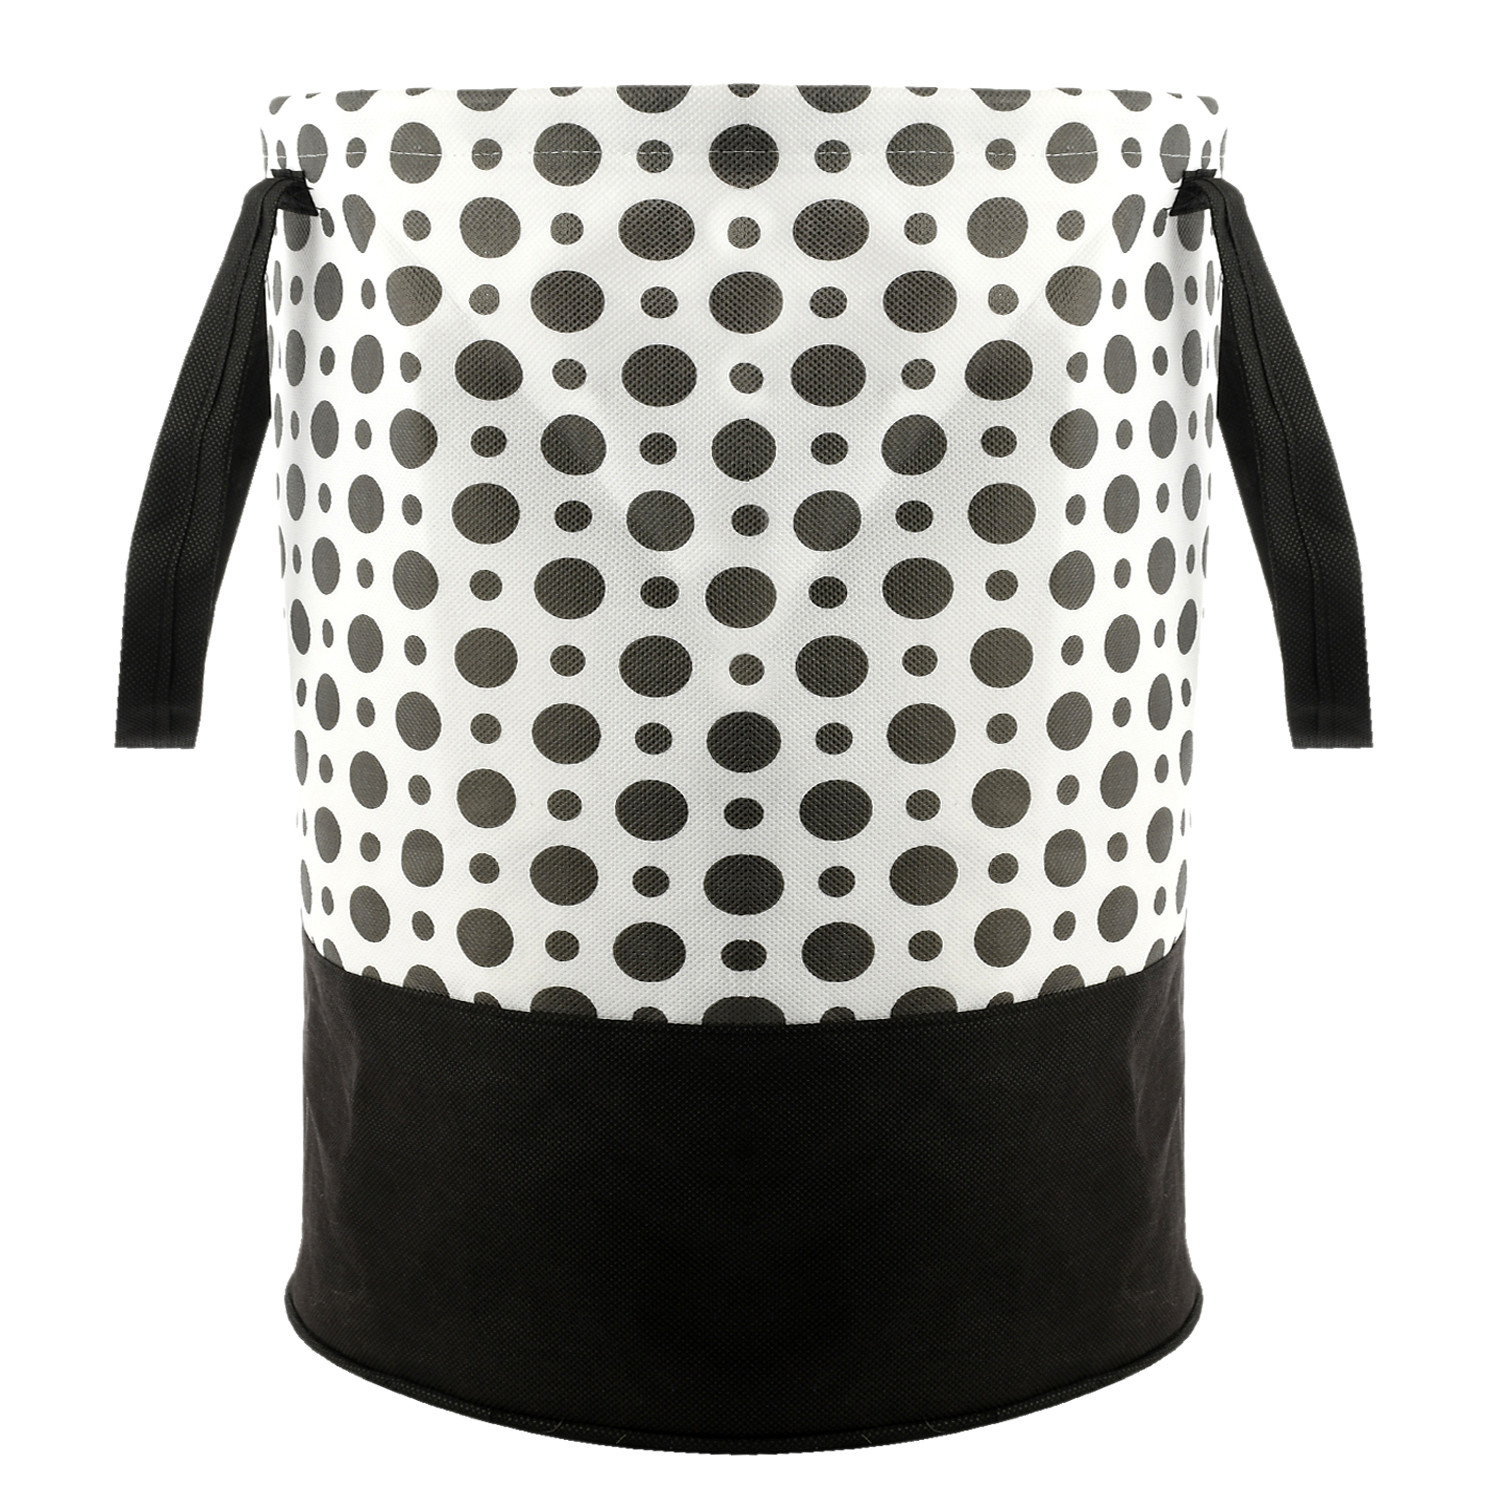 Kuber Industries Polka Dots Printed Waterproof Canvas Laundry Bag, Toy Storage, Laundry Basket Organizer 45 L (Black & White)